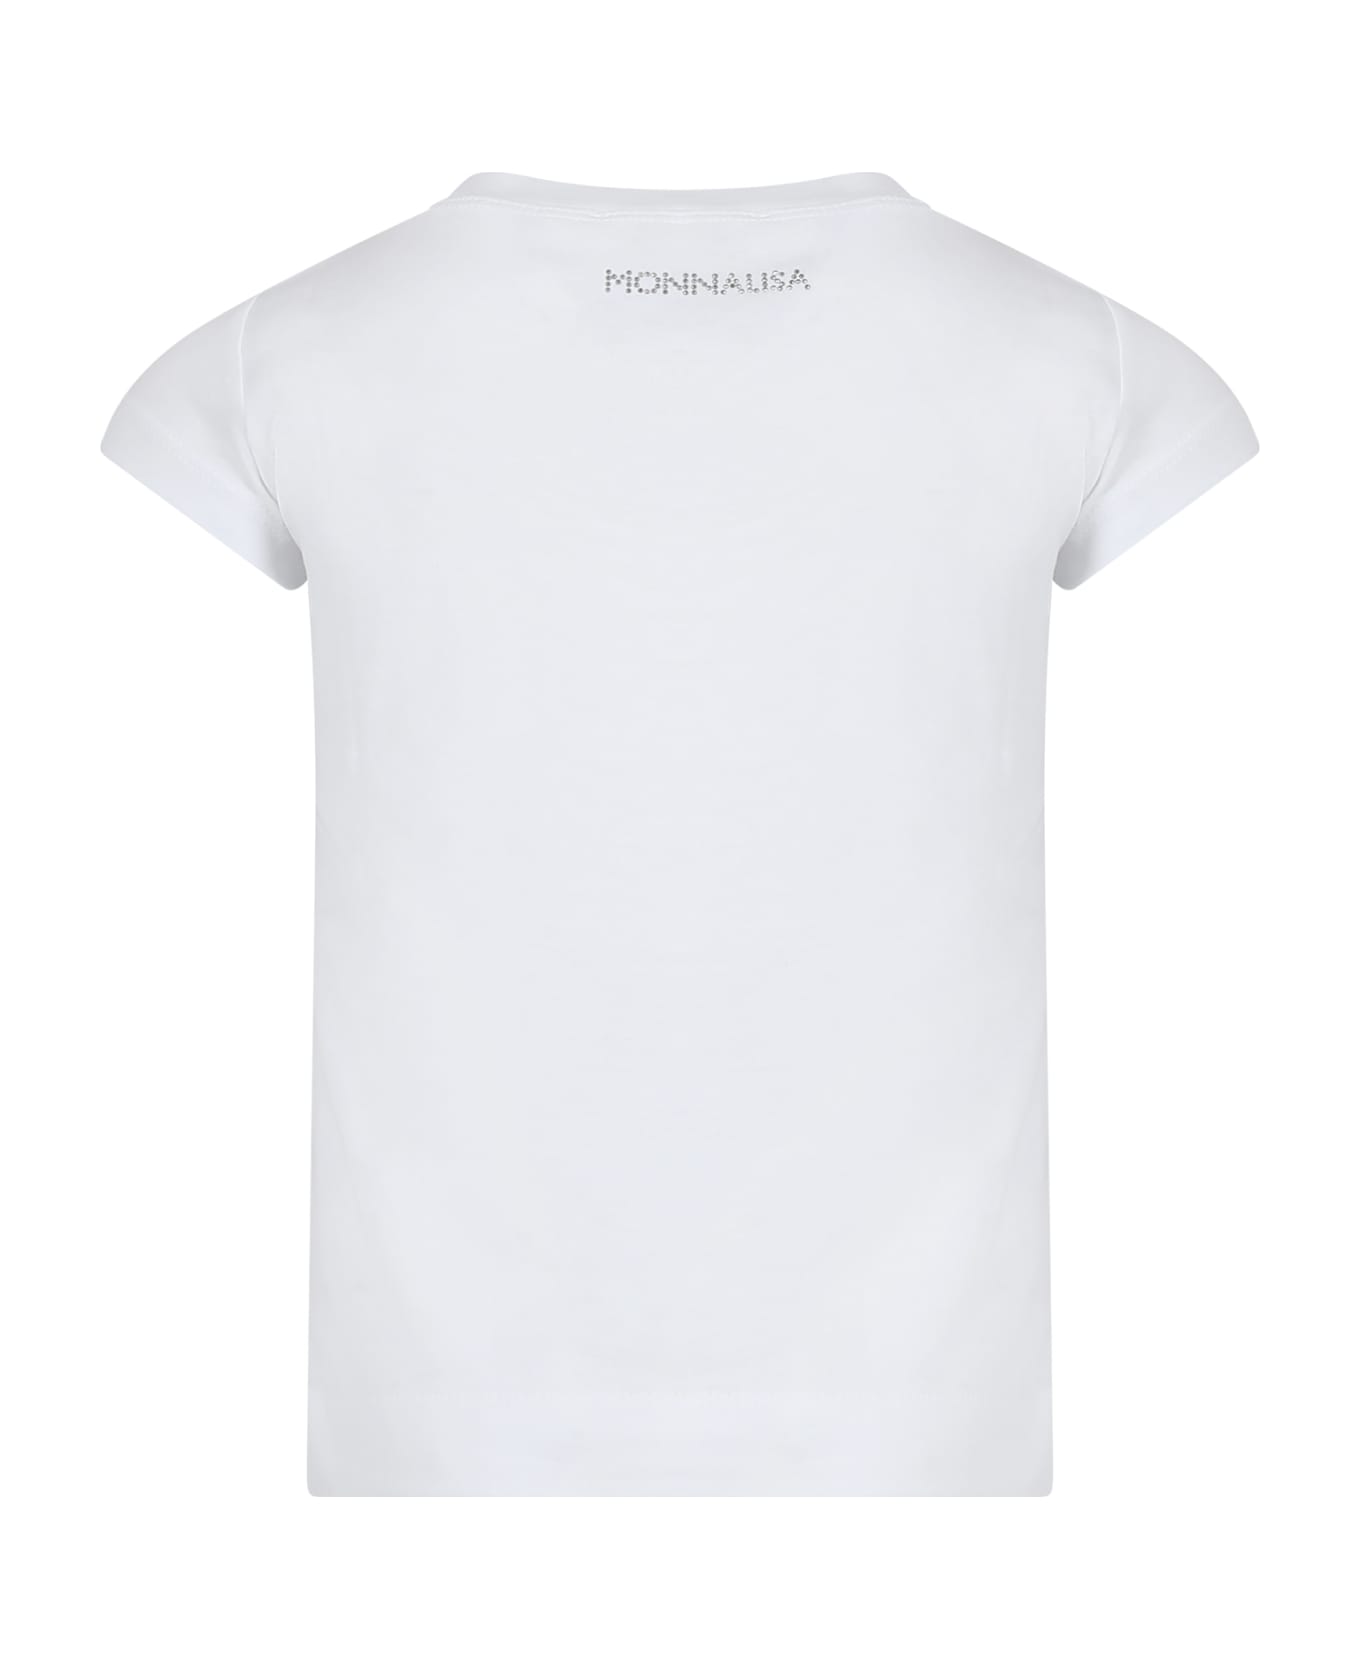 Monnalisa White T-shirt For Girl With Minnie - White